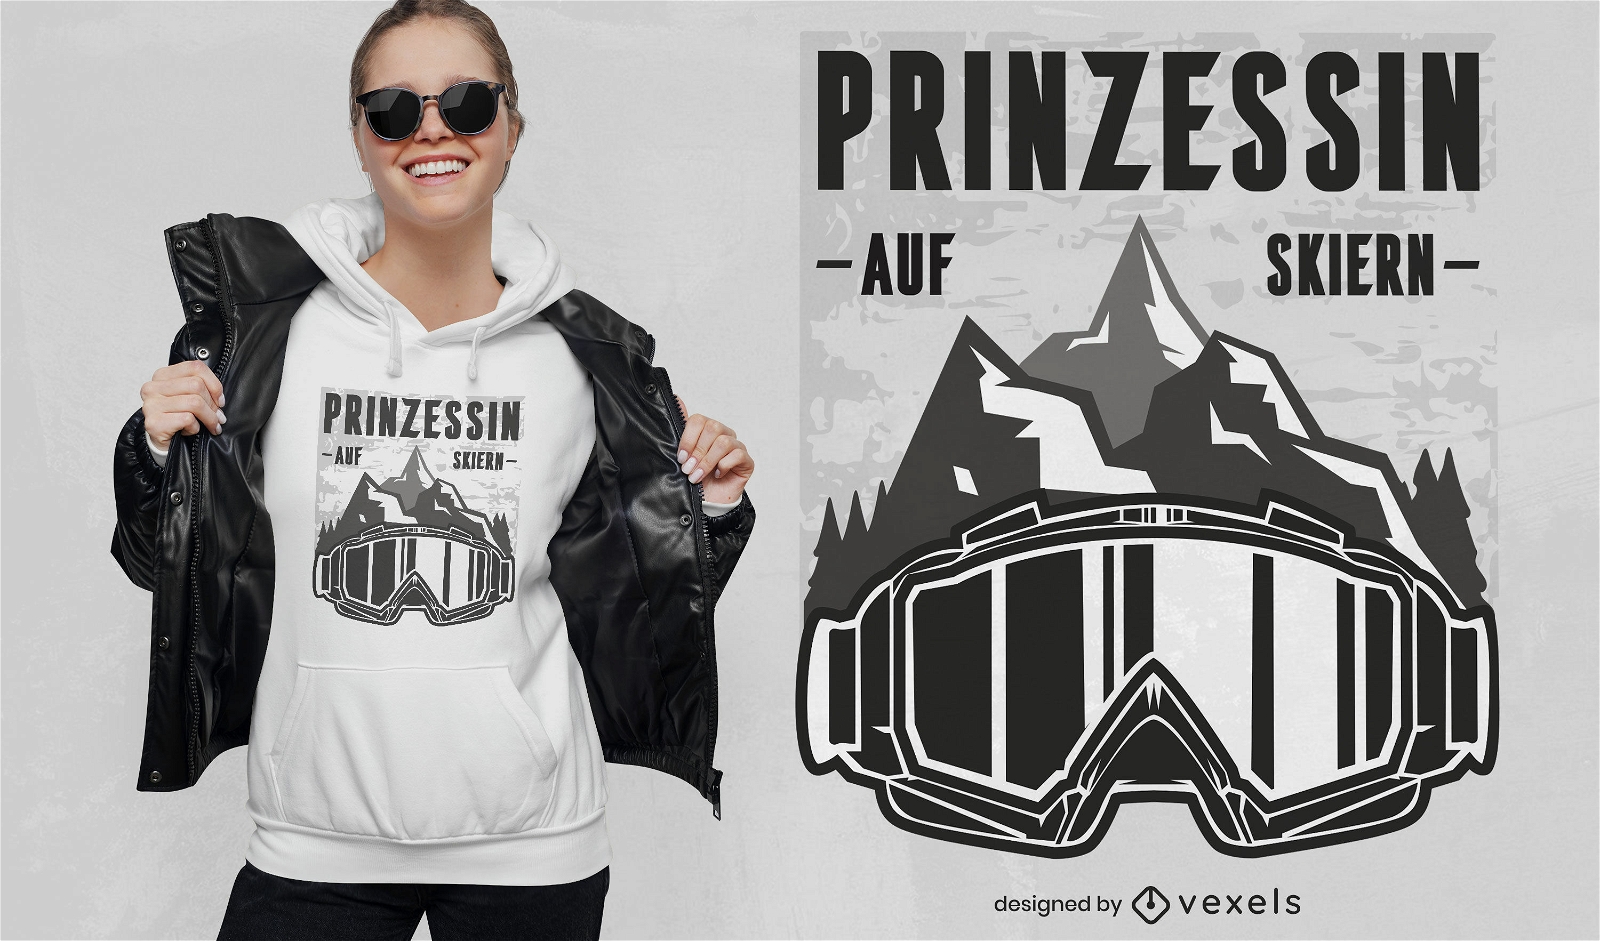 Princess of skis German t-shirt design